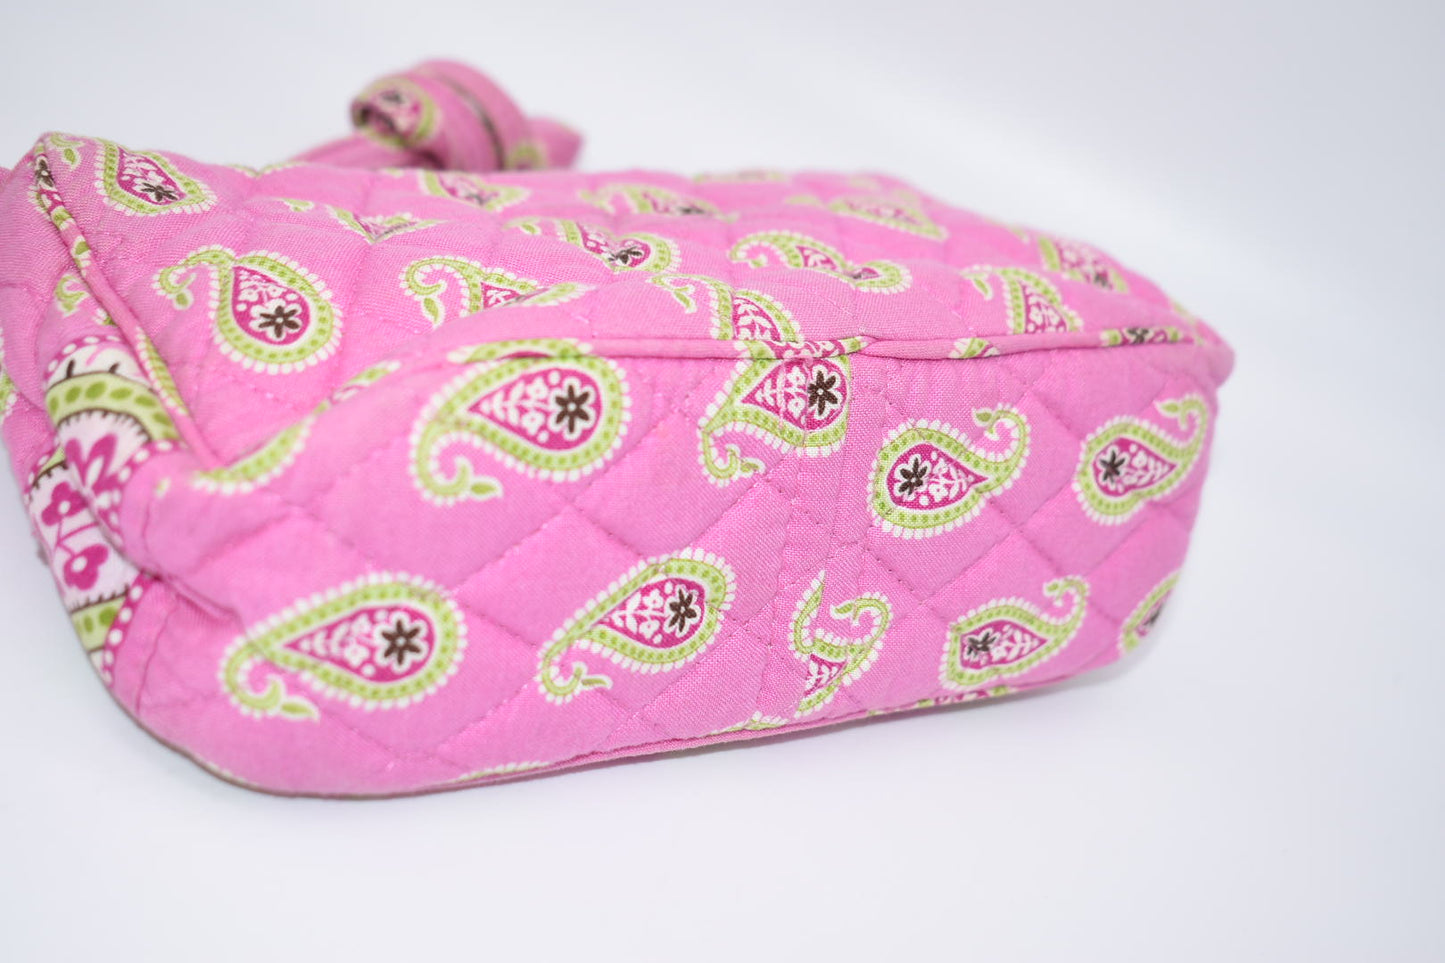 Vera Bradley Amy Crossbody / Shoulder Bag in "Bermuda Pink" Pattern